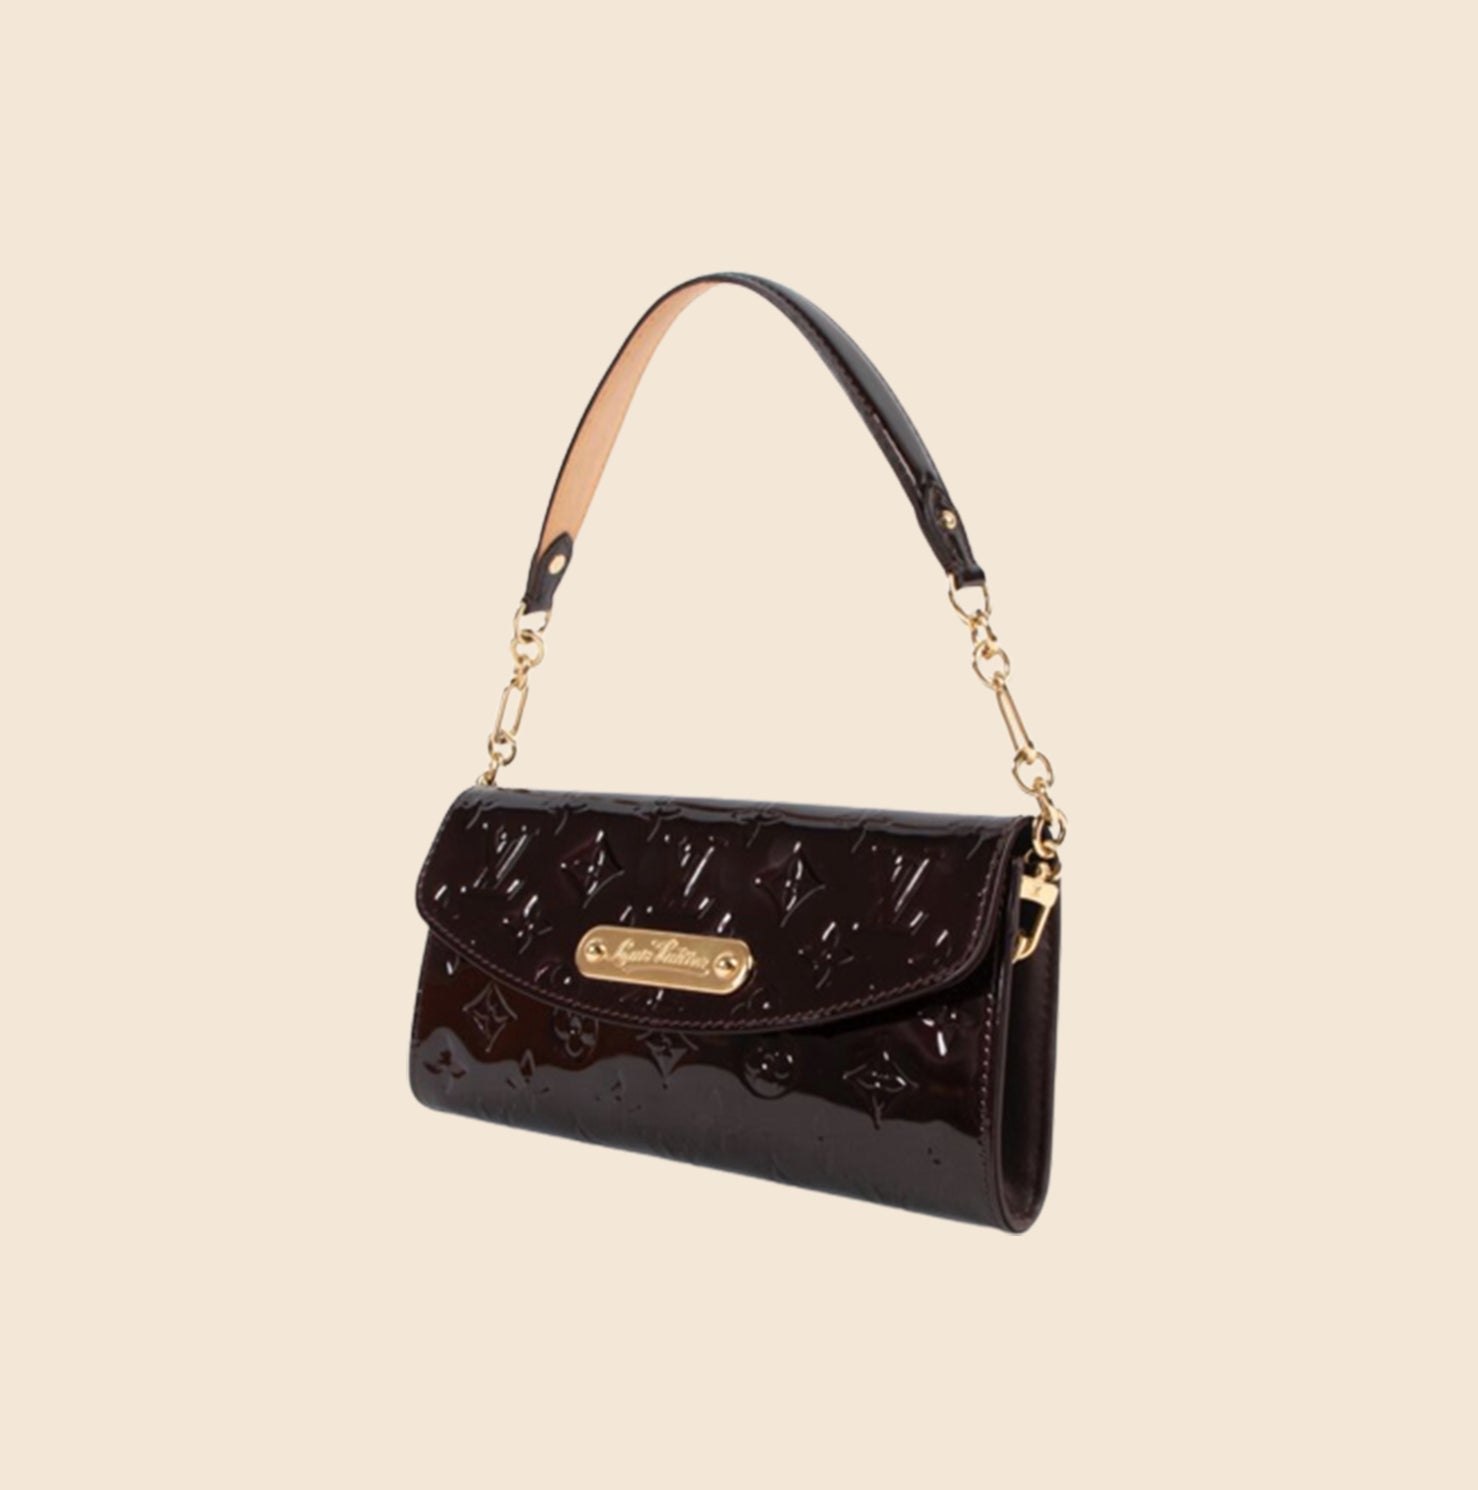 Louis Vuitton crocodile handbag.